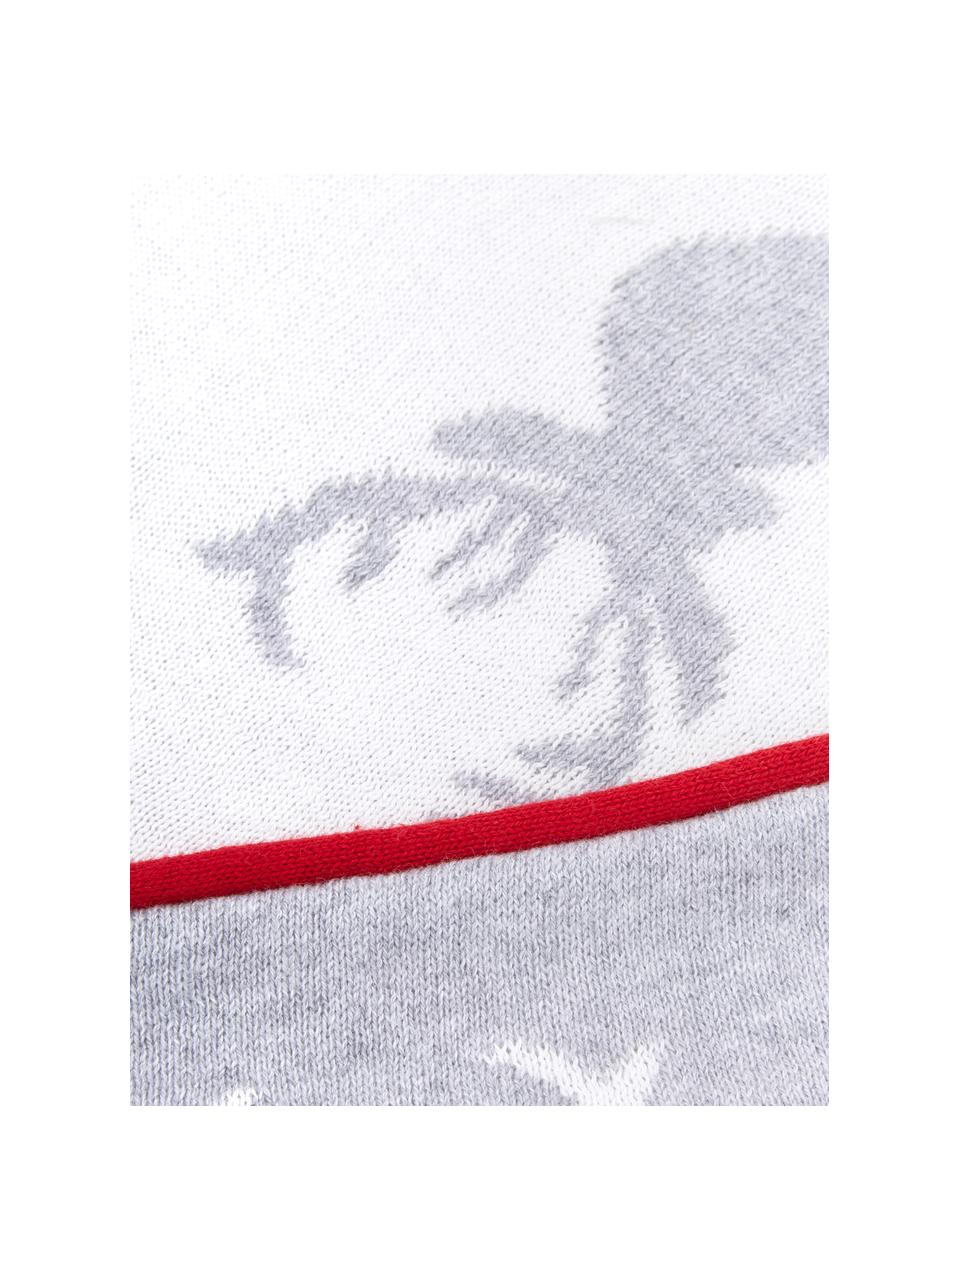 Funda de cojín de punto Forest, caras distintas, 100% algodón, Blanco crema, gris claro, rojo, An 30 x L 50 cm